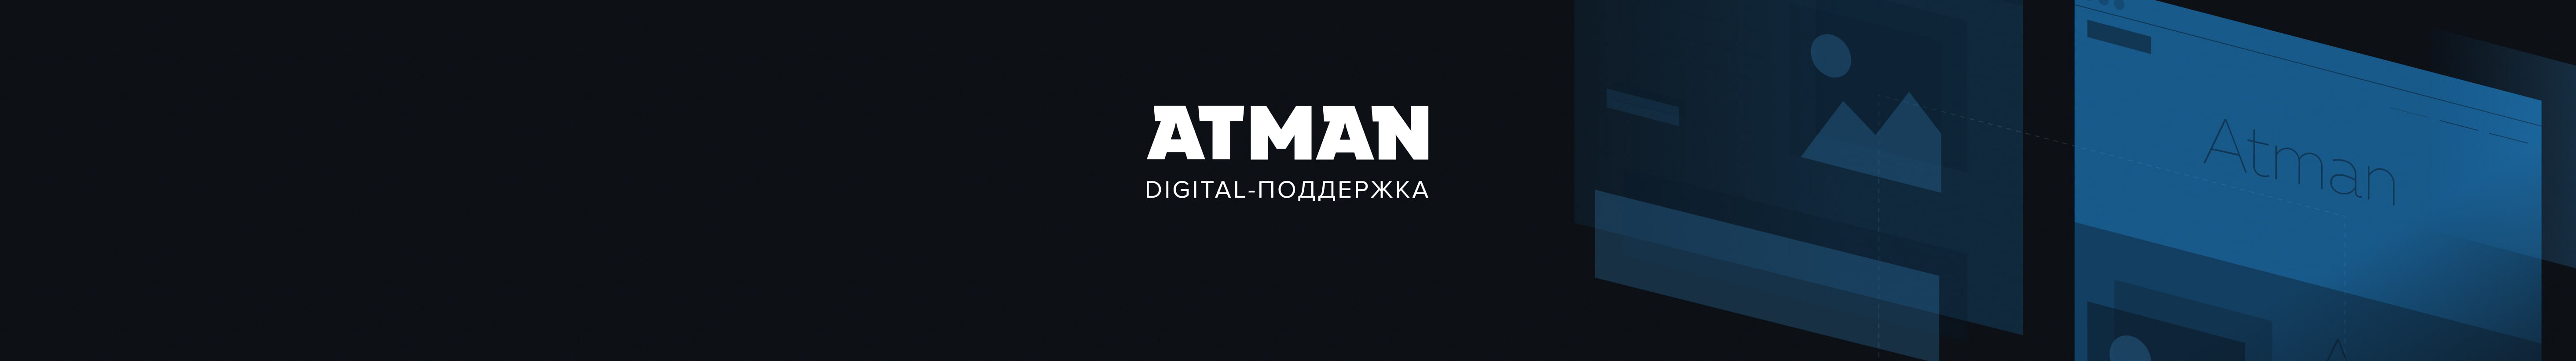 Atman Team's profile banner